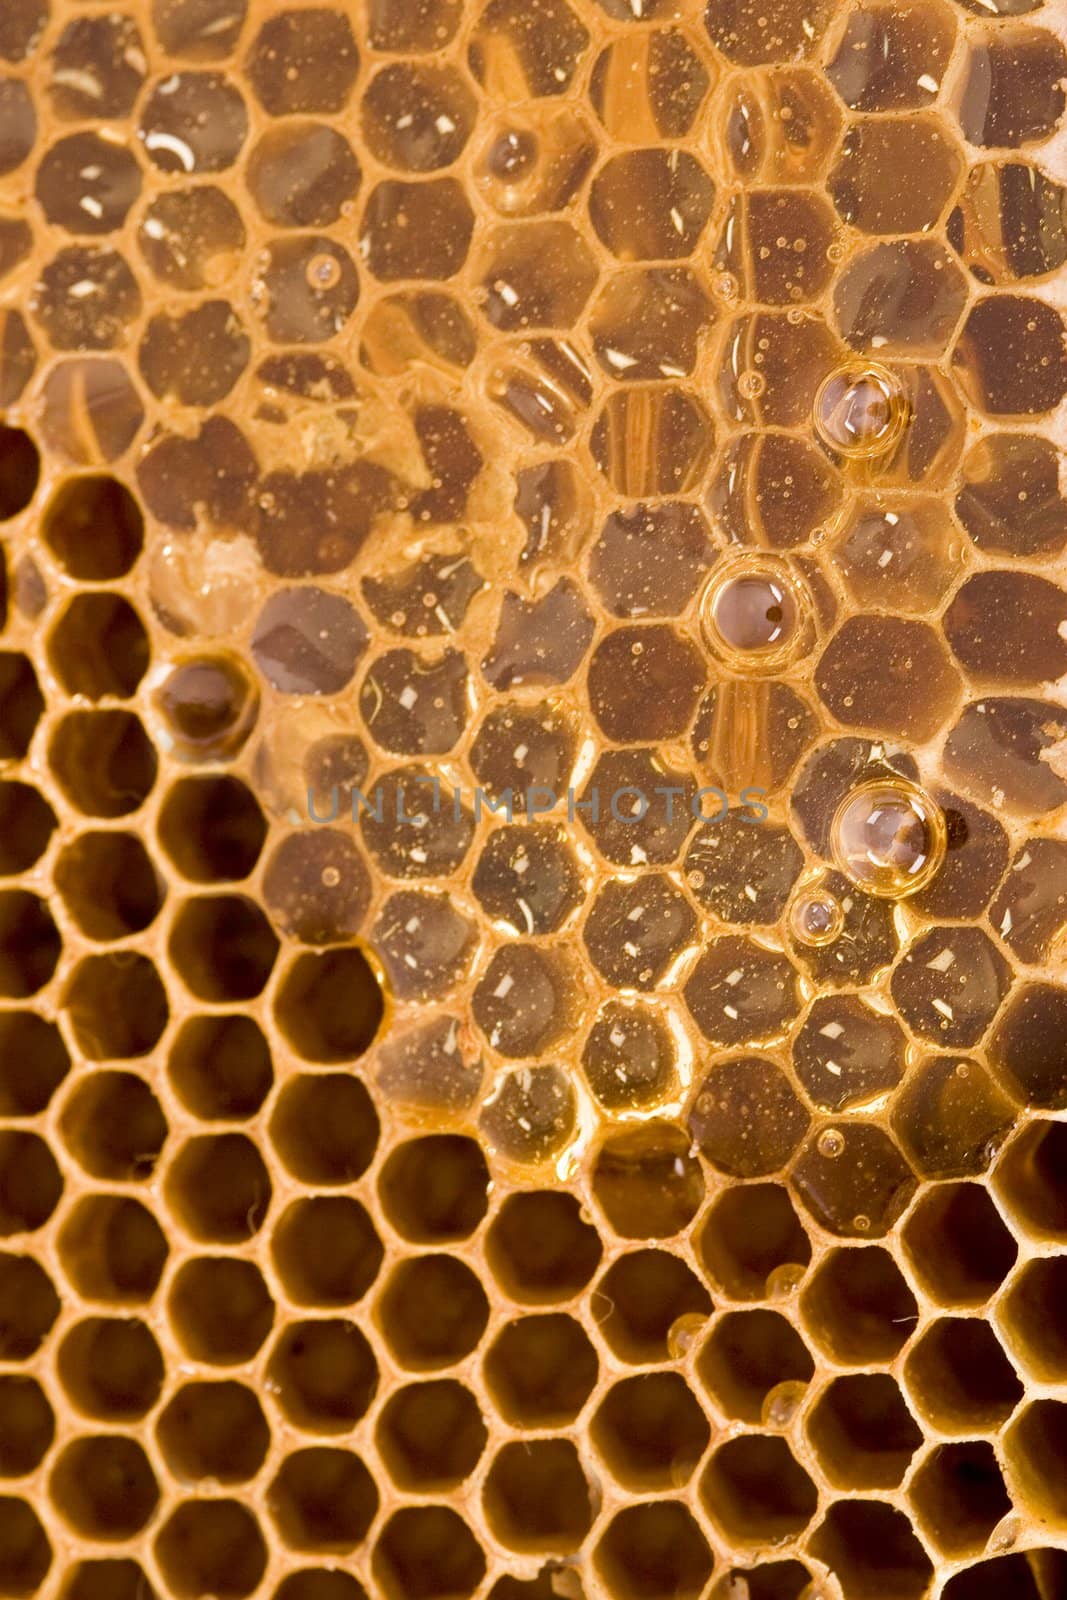 Beautiful yellow patch of  honey